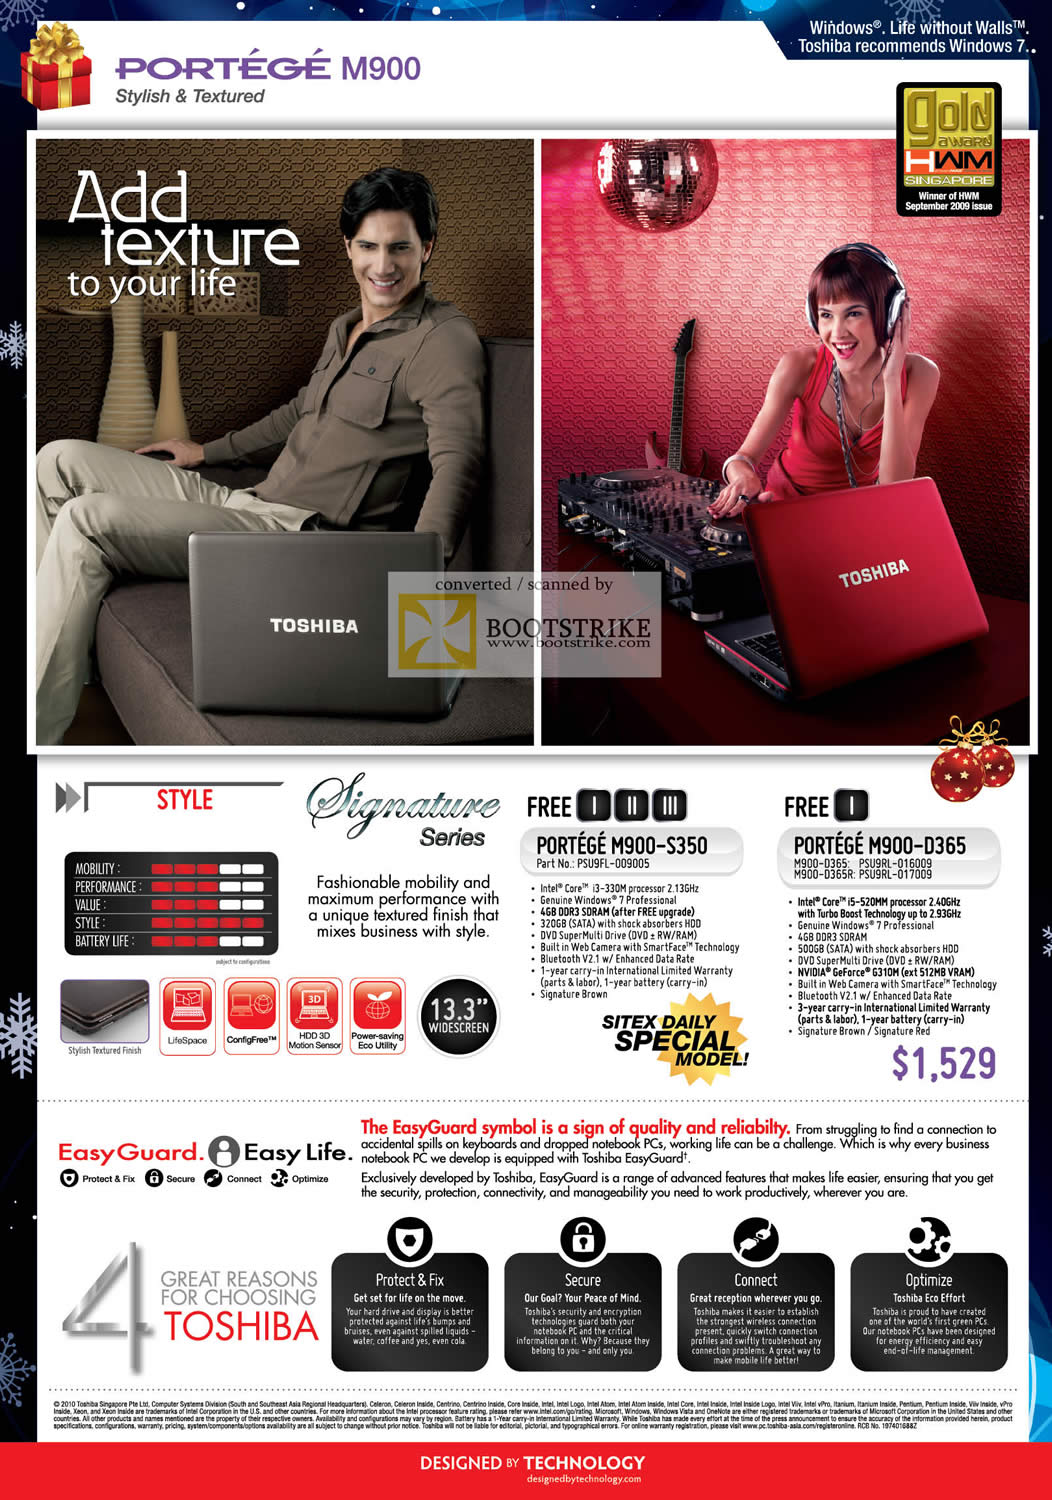 Sitex 2010 price list image brochure of Toshiba Portege M900 Signature M900 S350 D365 EasyGuard